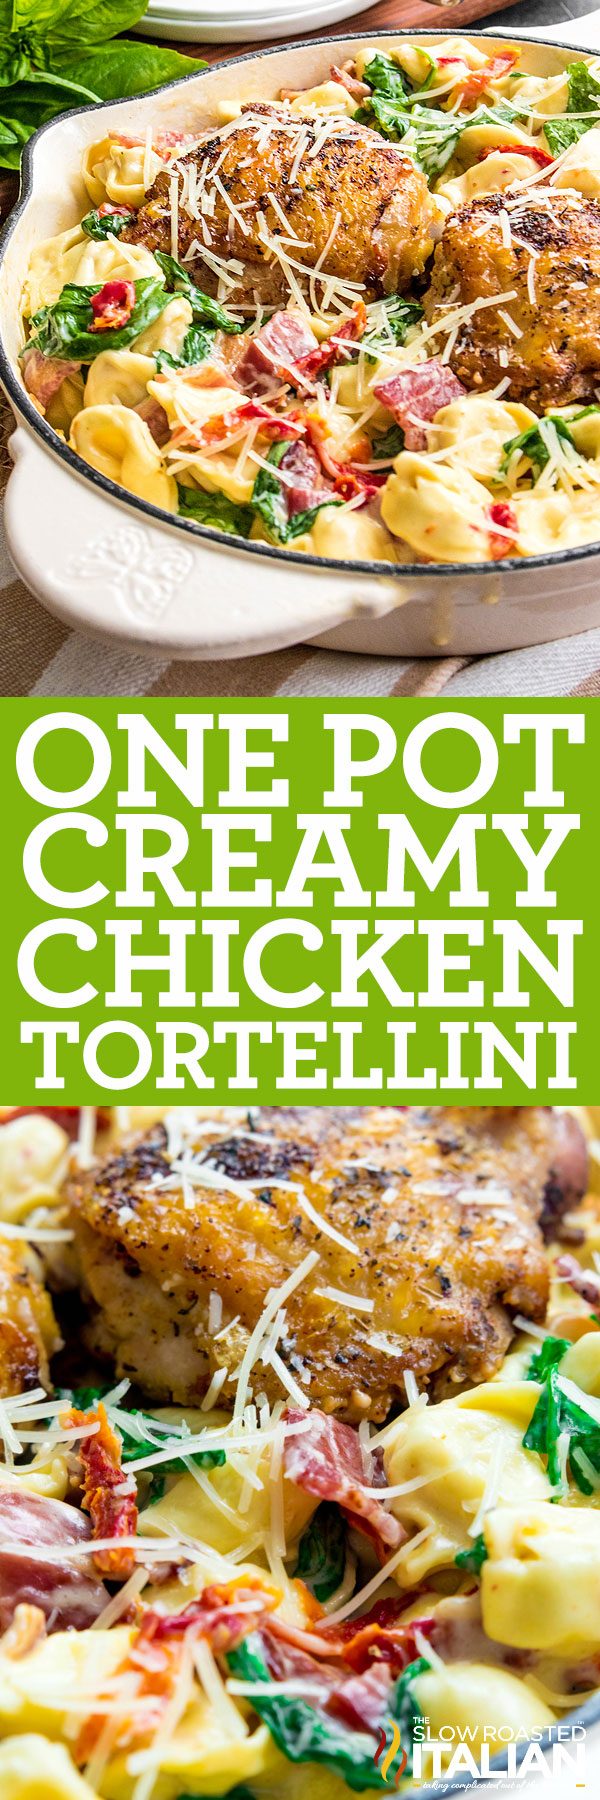 one-pot-creamy-chicken-tortellini-pin-9159291